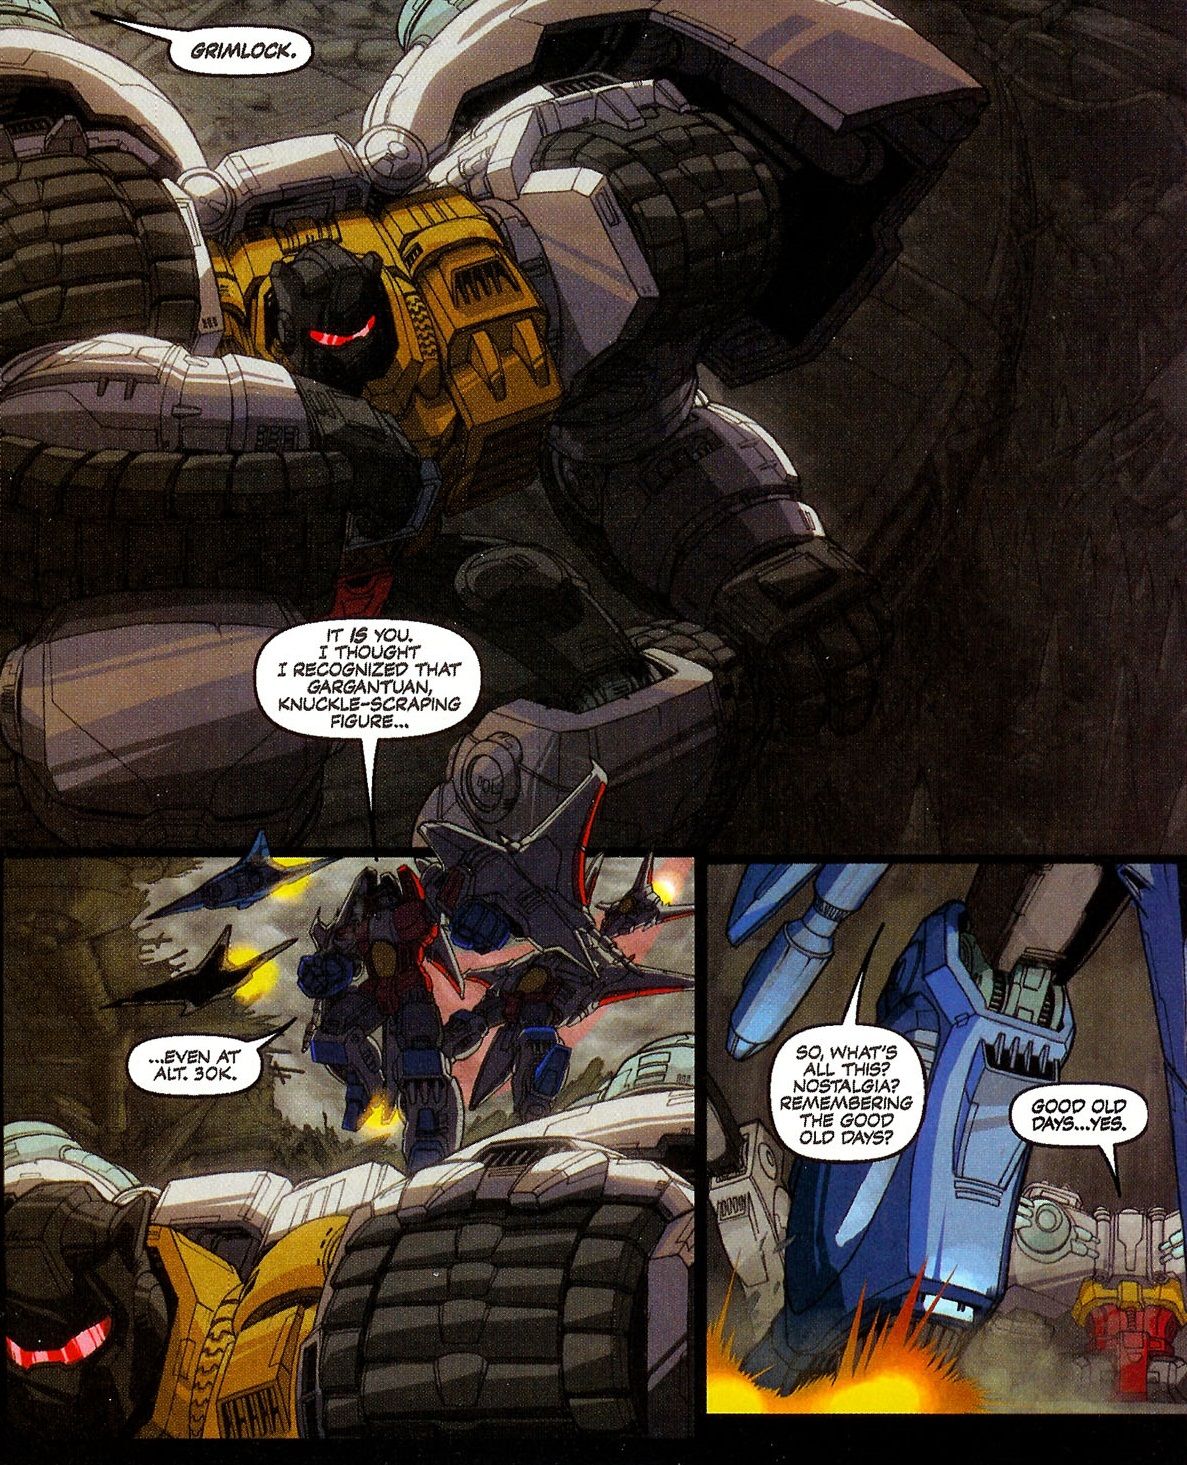 Gimlock as seen in Transformers: War Within